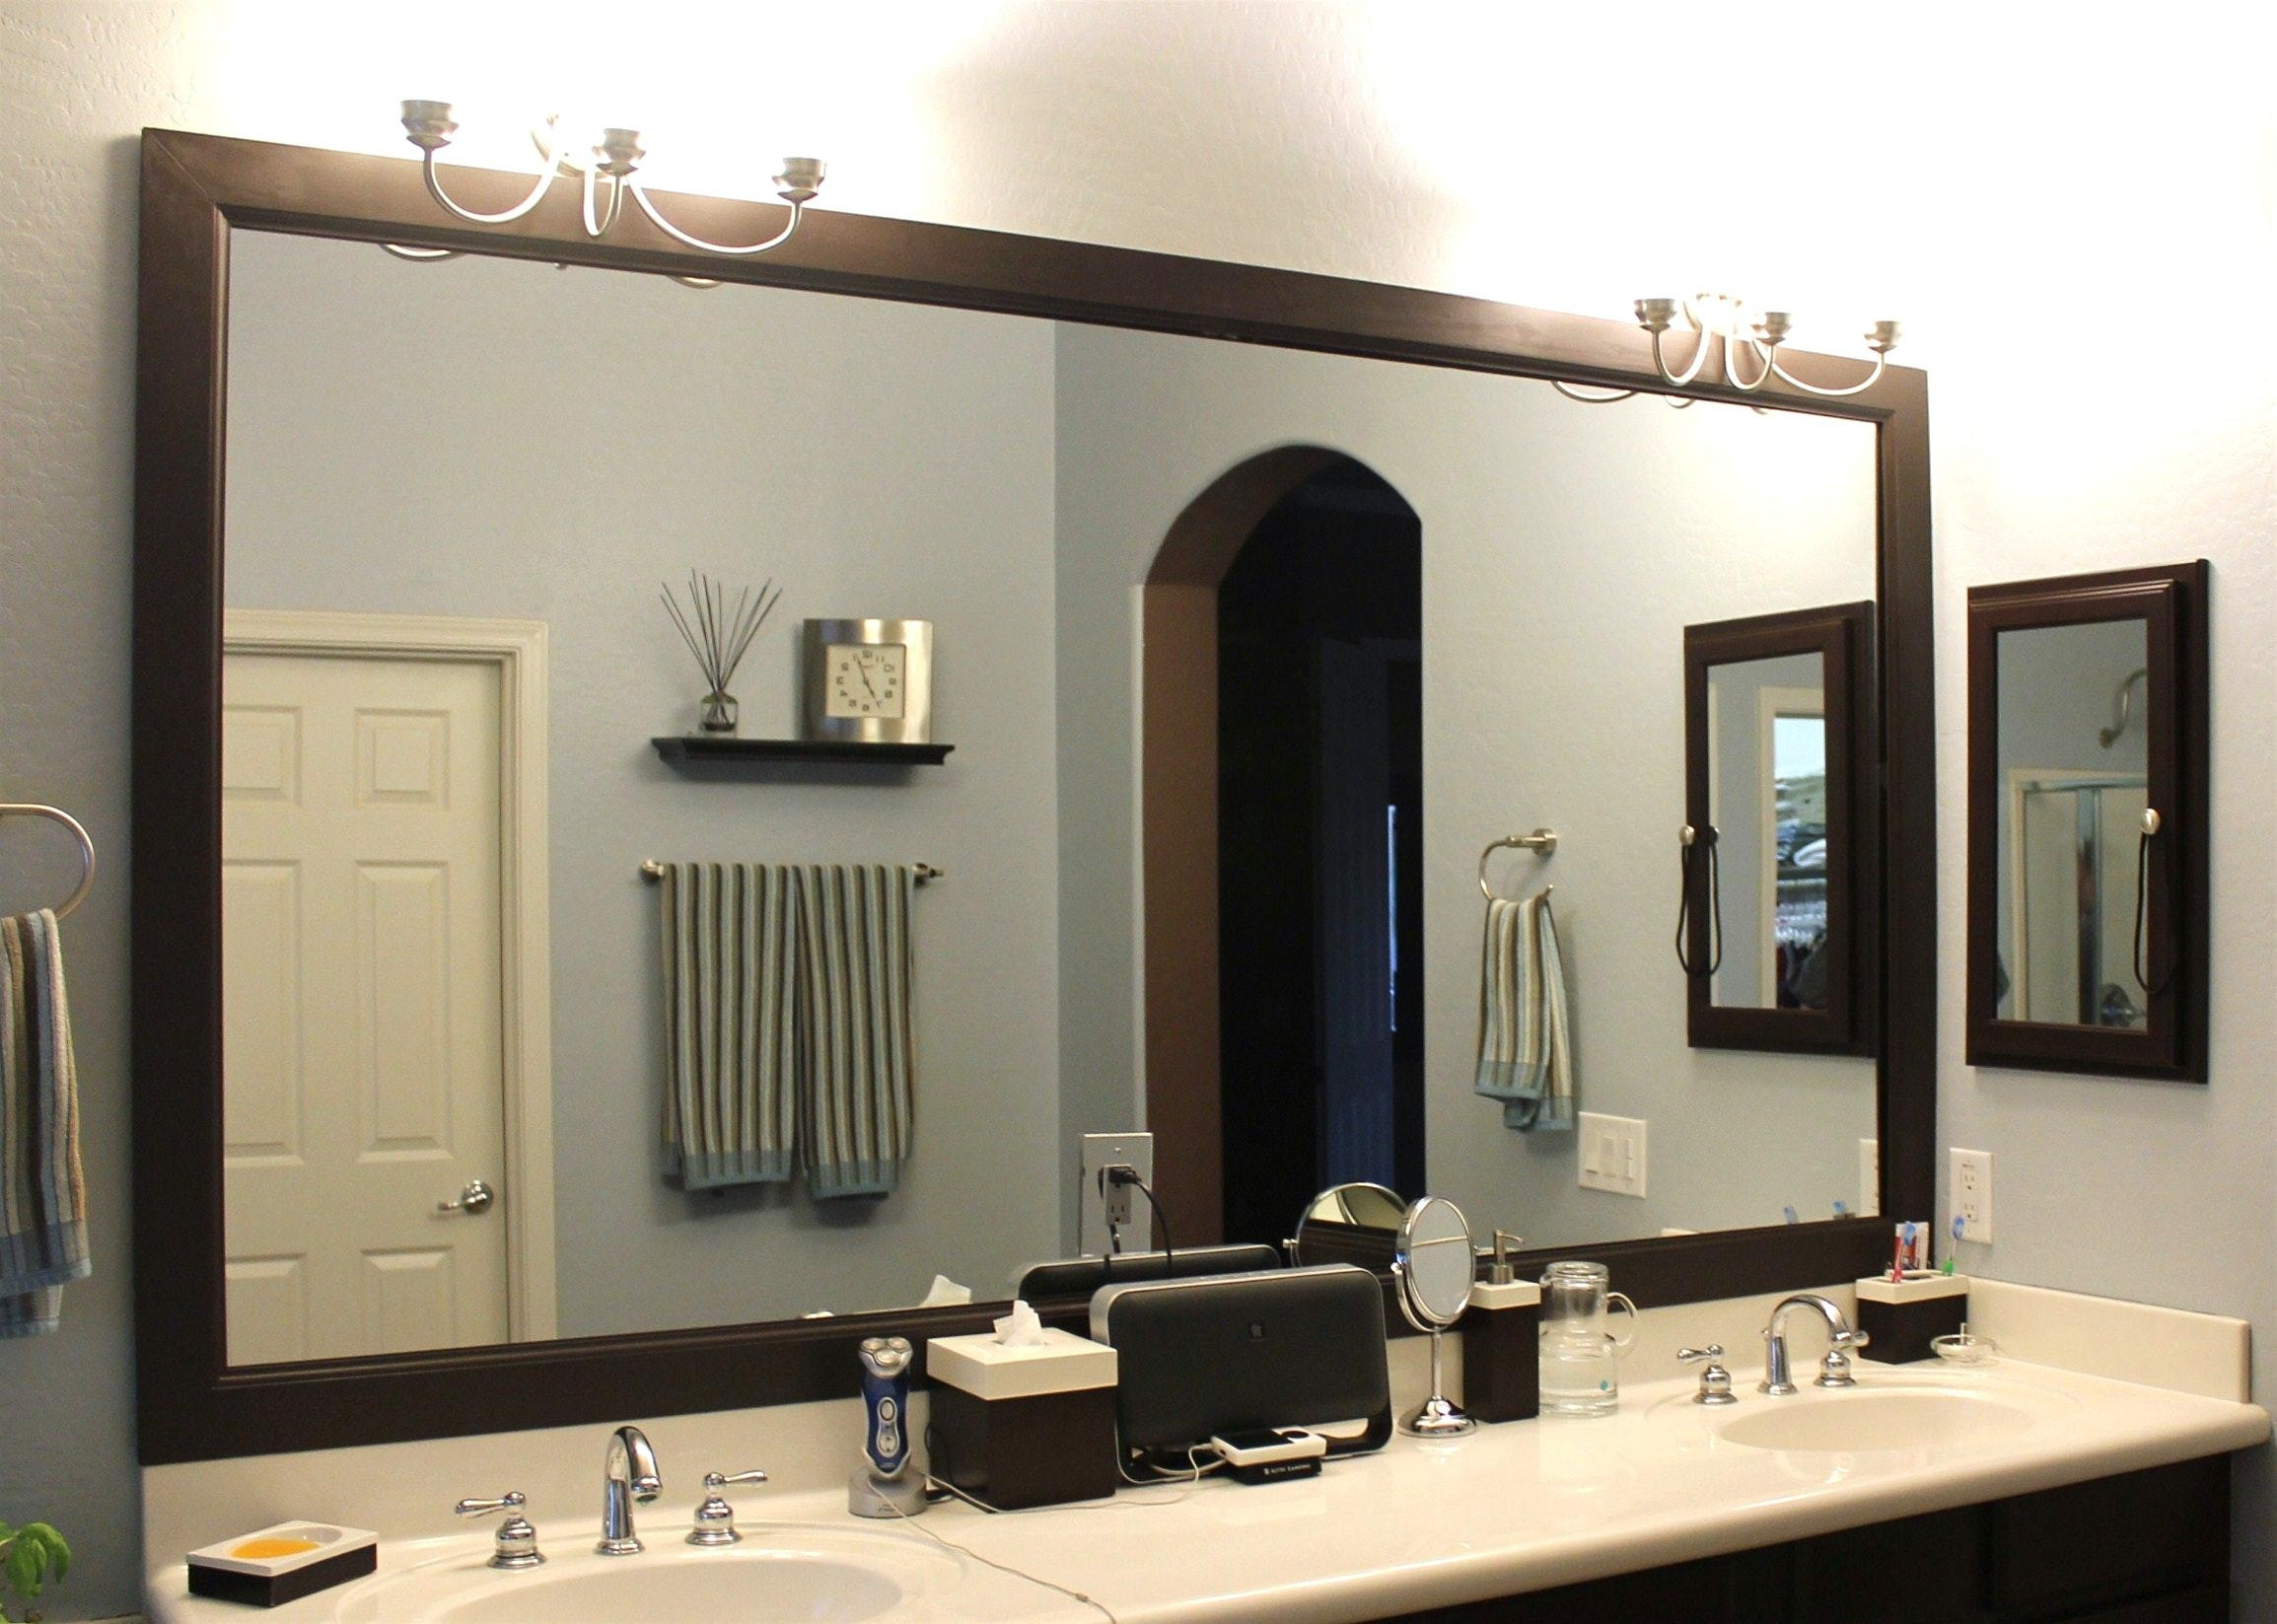 Custom Framed Bathroom Mirrors
 20 Collection of Custom Bathroom Mirrors